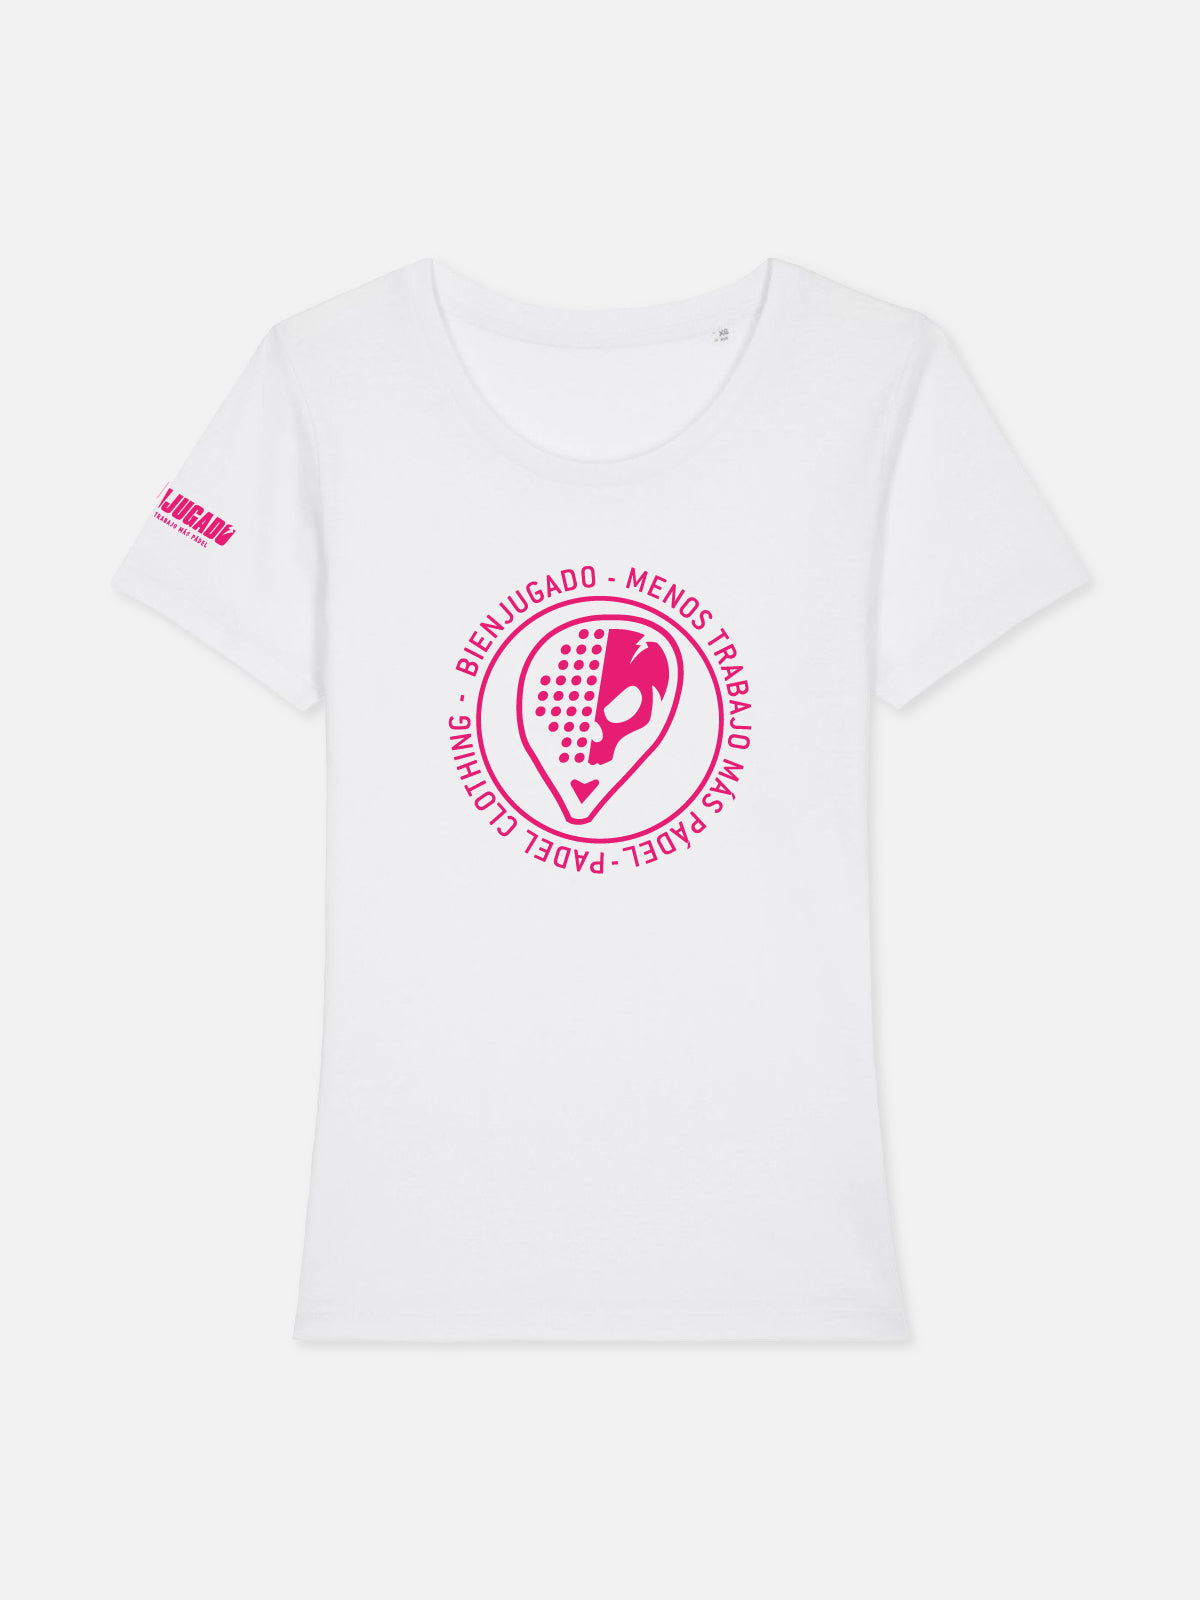 Fun Women's T-Shirt - Bienjugado Circle